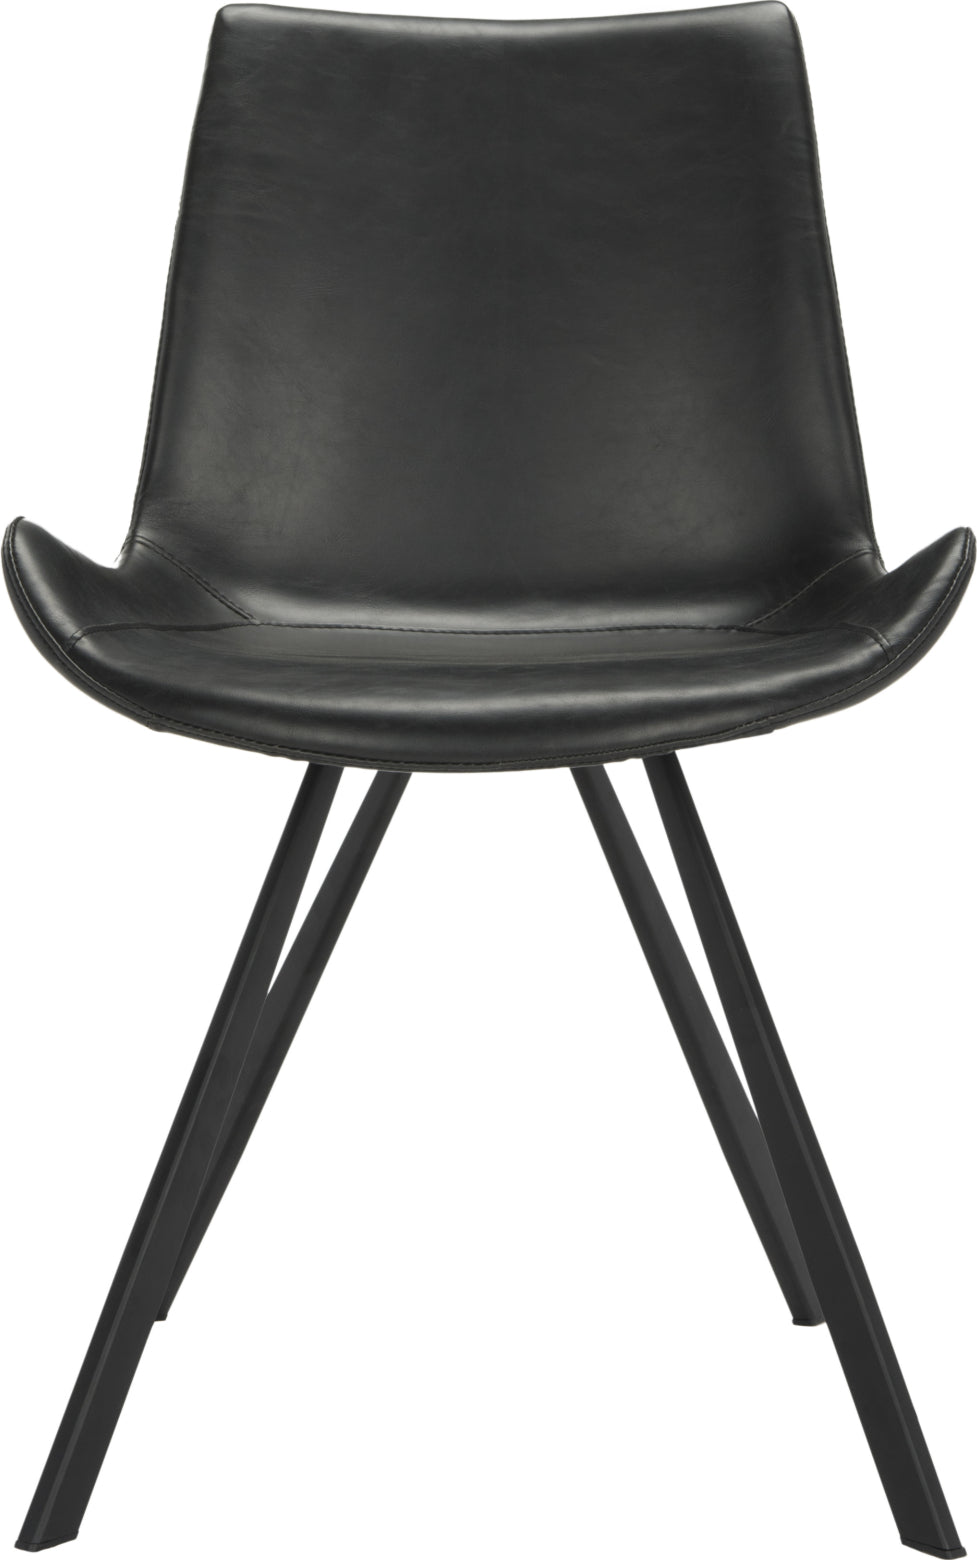 Safavieh Terra Midcentury Modern Dining Chair Black and Furniture main image